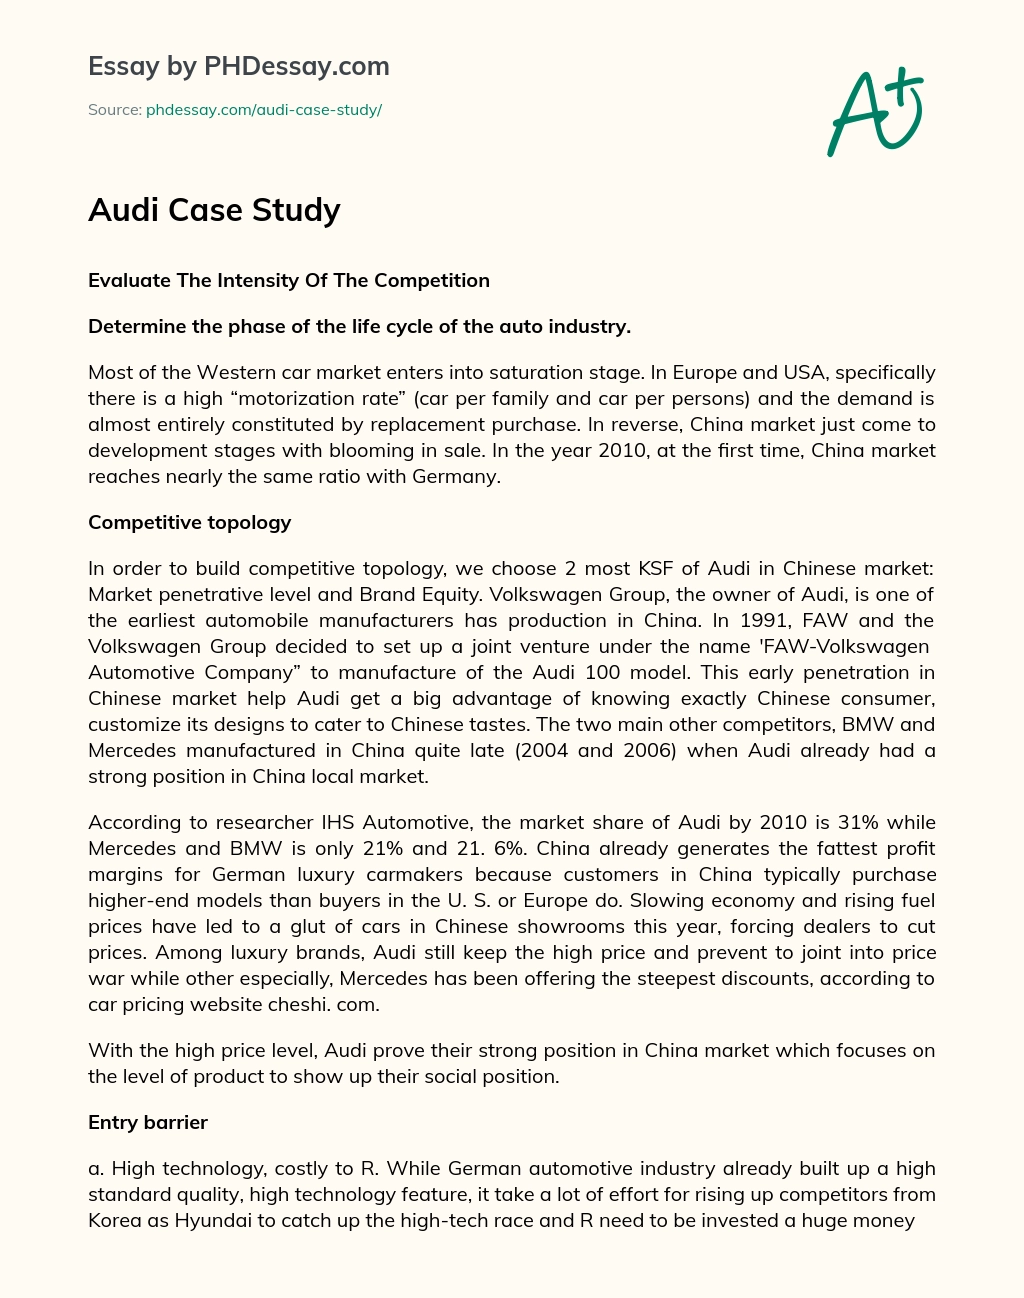 Audi Case Study essay